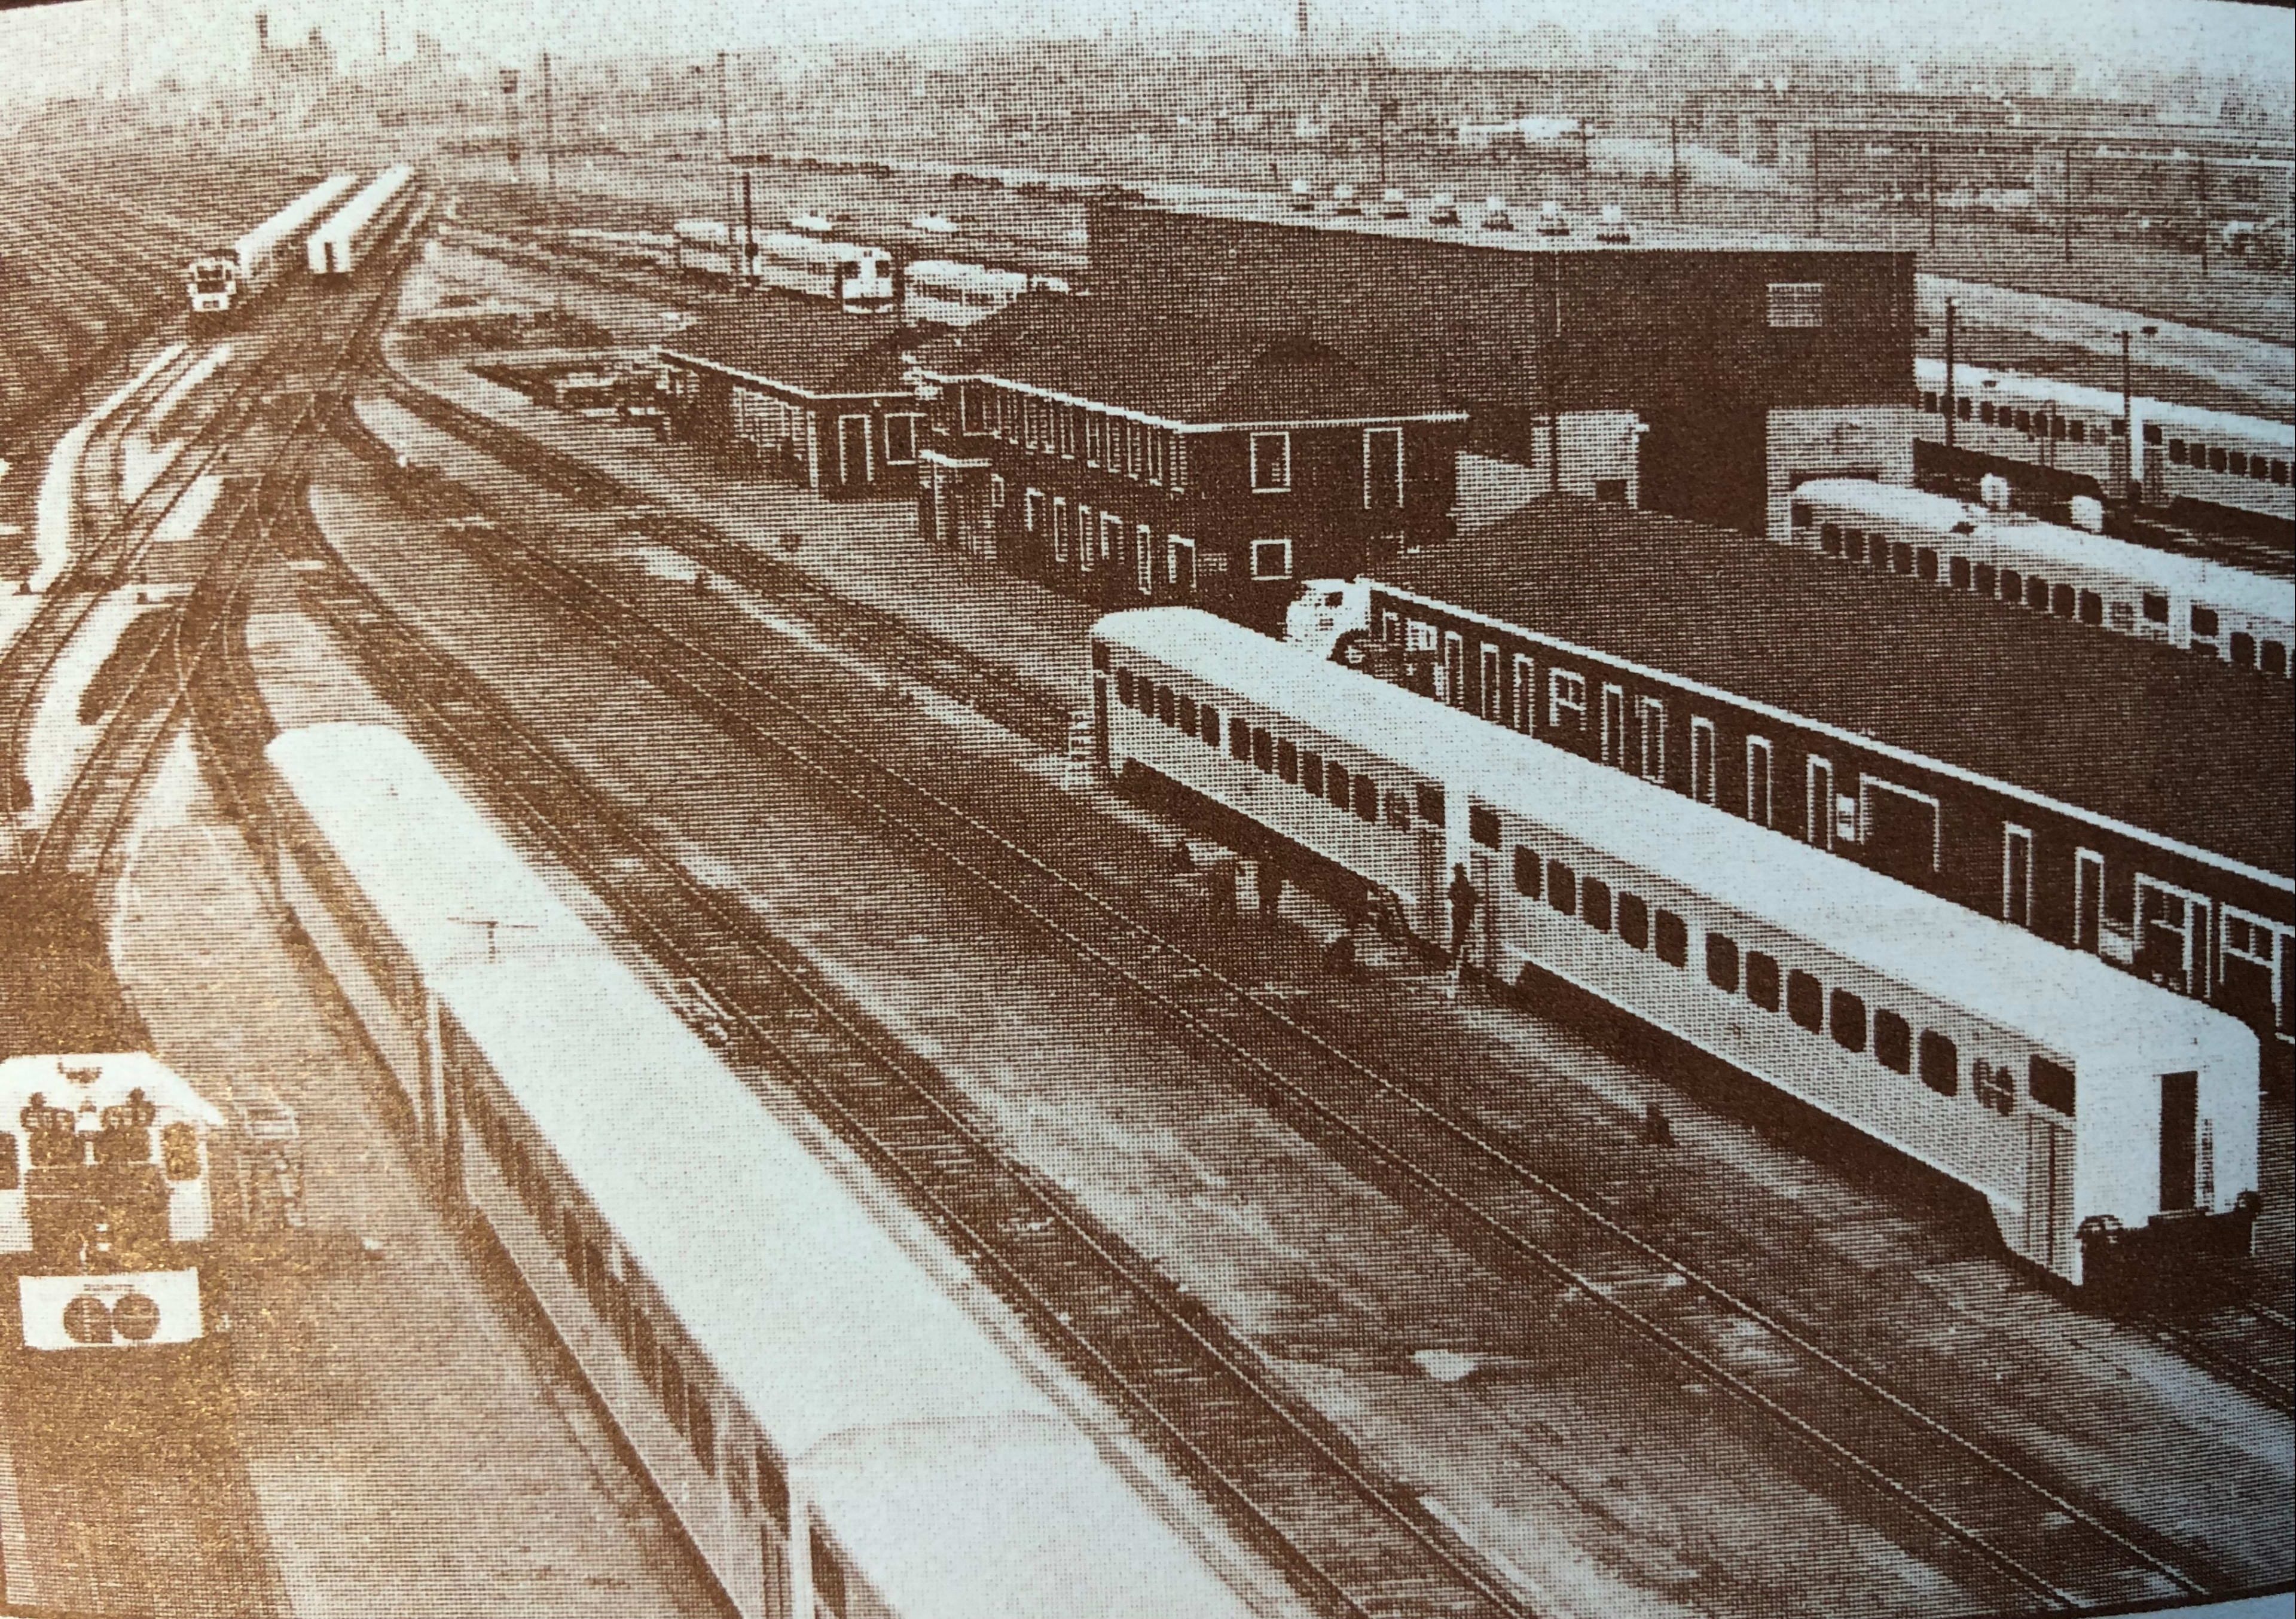 Historical trains sitting in the rail yard.